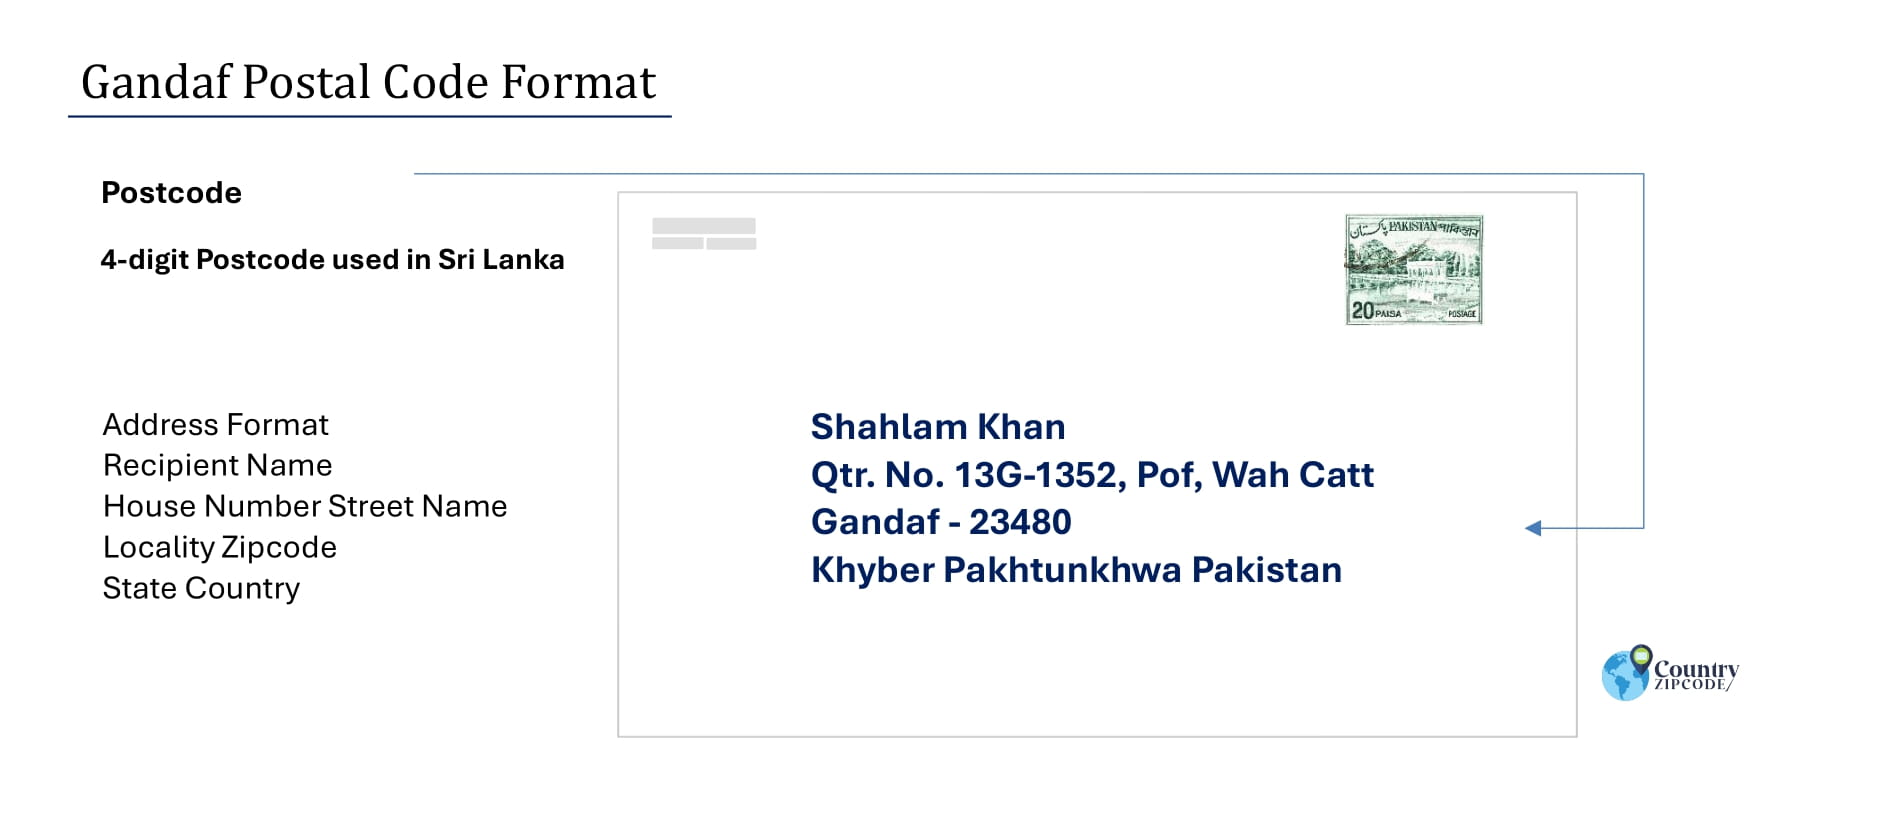 Example of Gandaf Pakistan Postal code and Address format